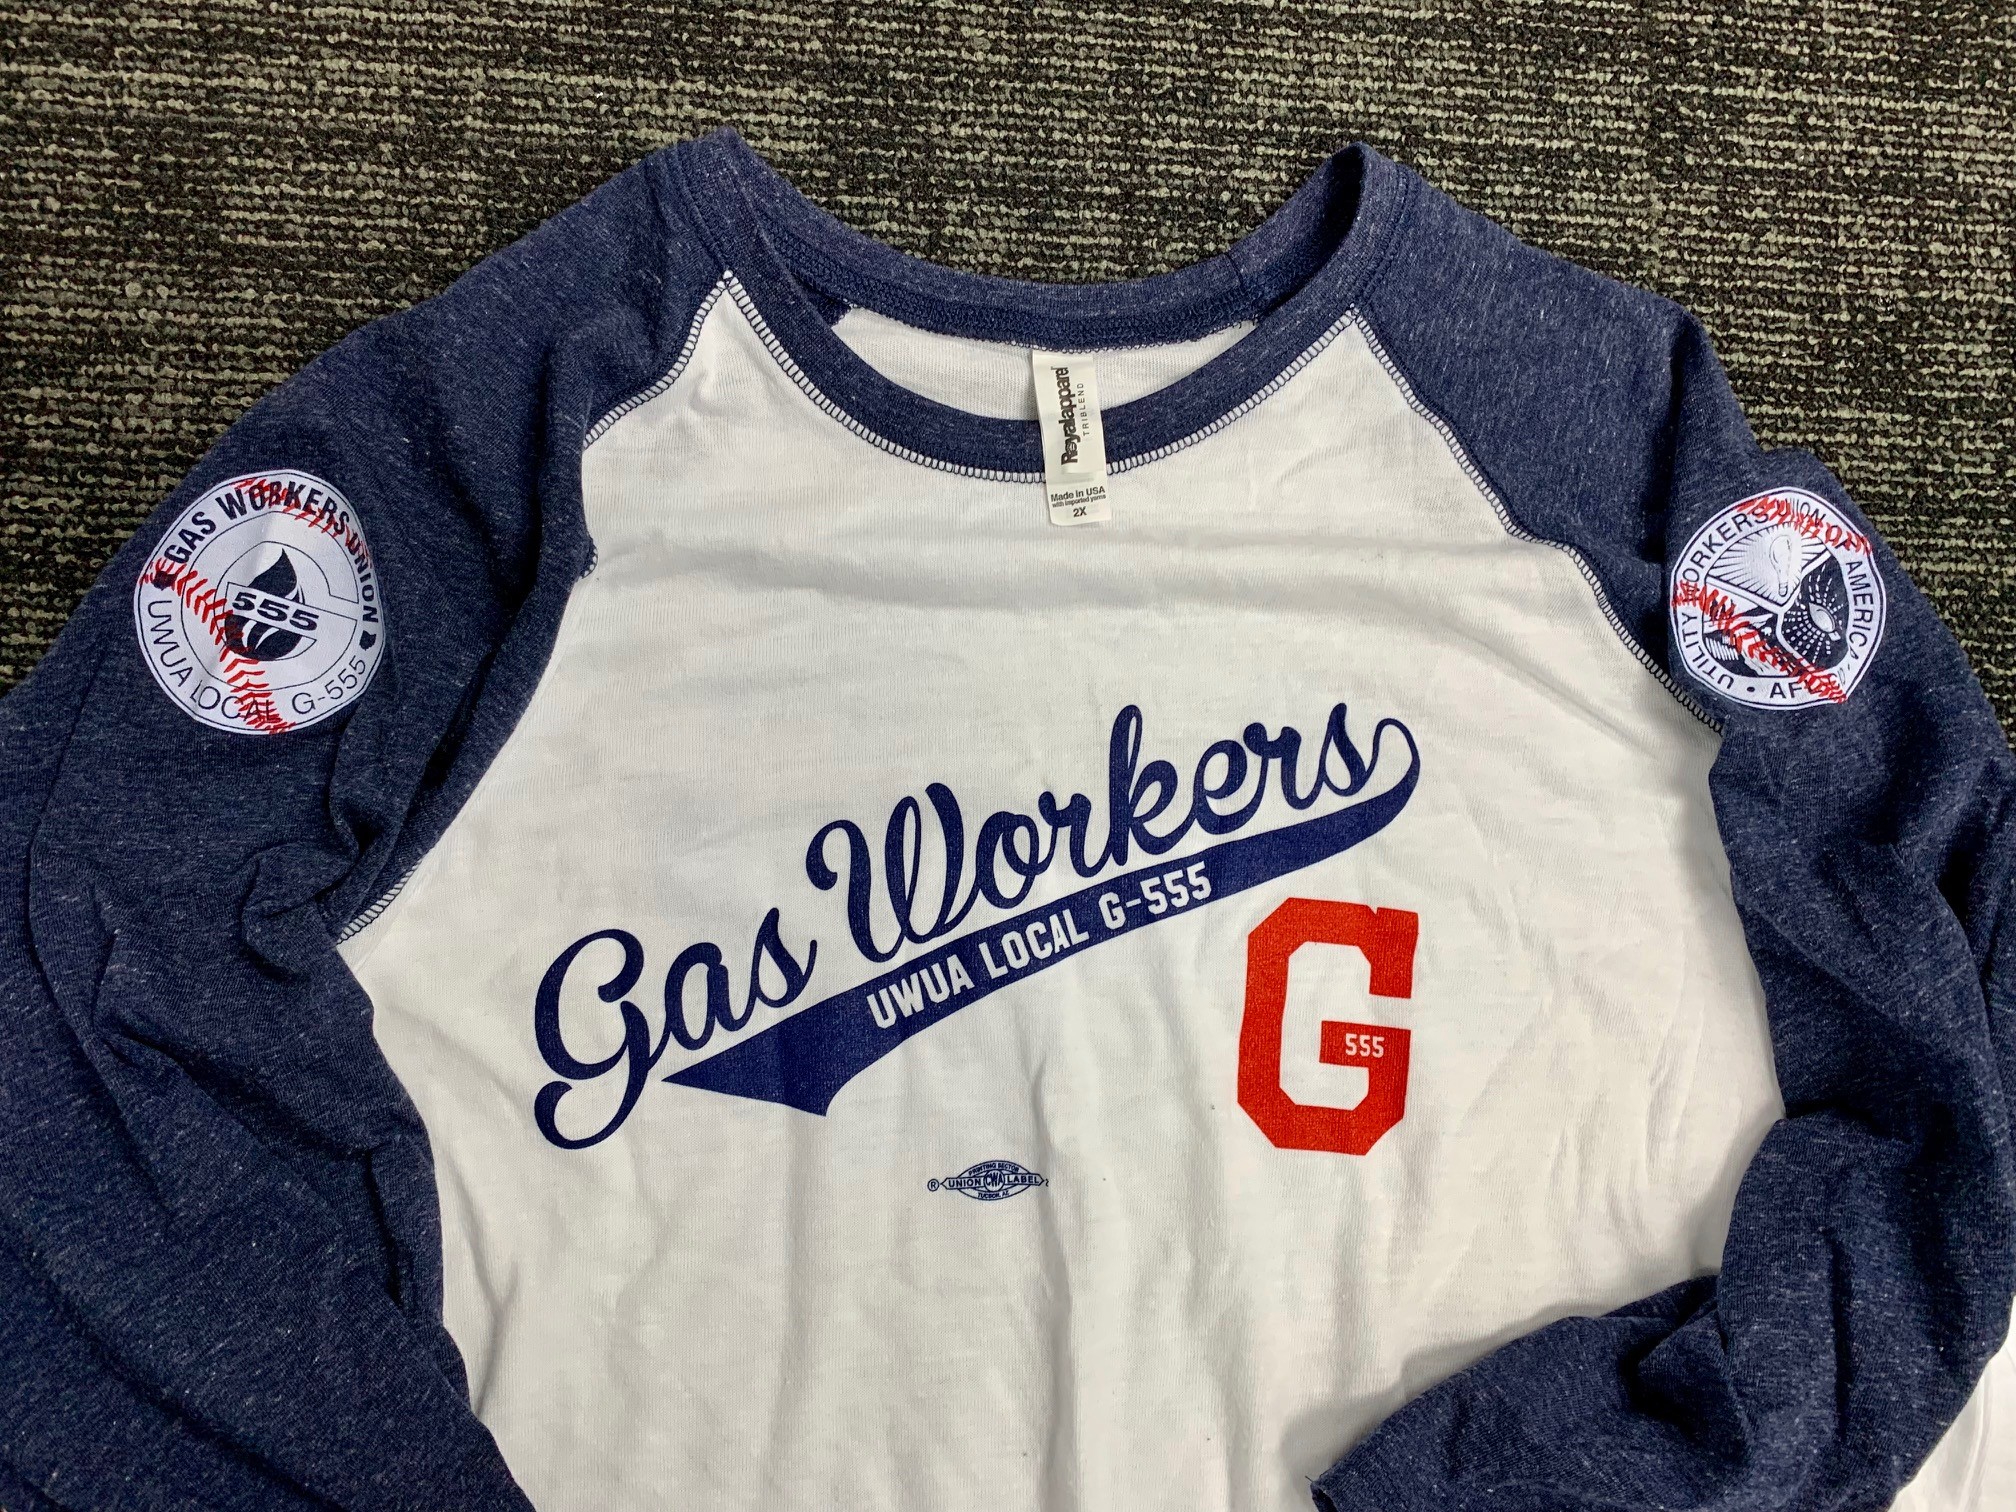 fordøjelse Lav et navn Kondensere T-Shirt – Baseball Style – Large | Gas Workers Union Local G-555